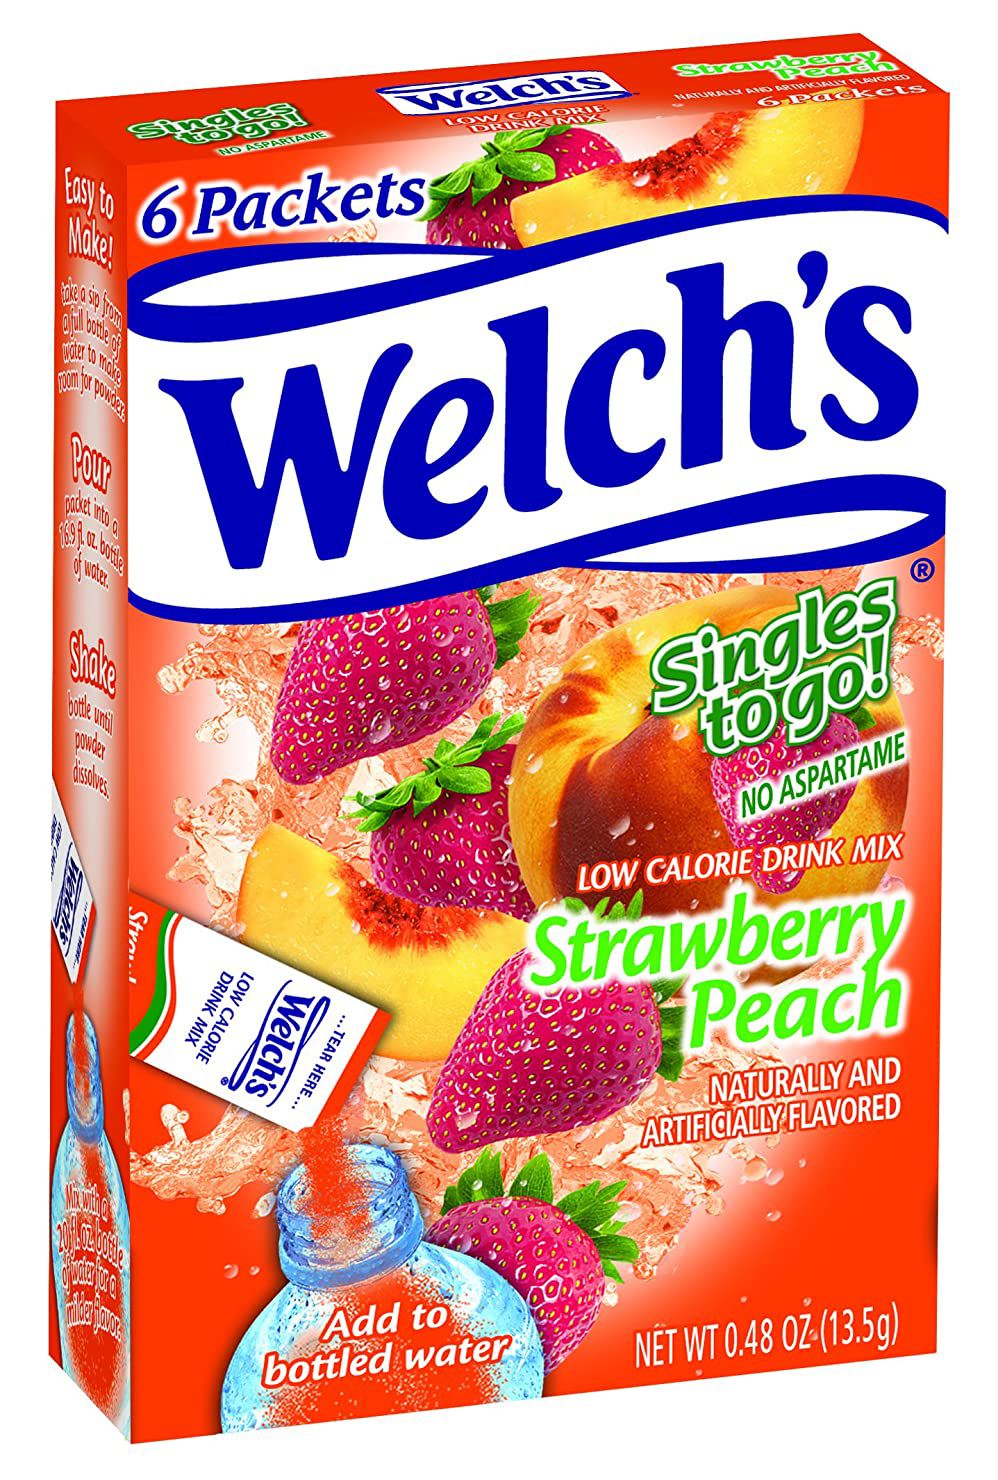 #Flavor_Strawberry Peach #Size_6 sticks